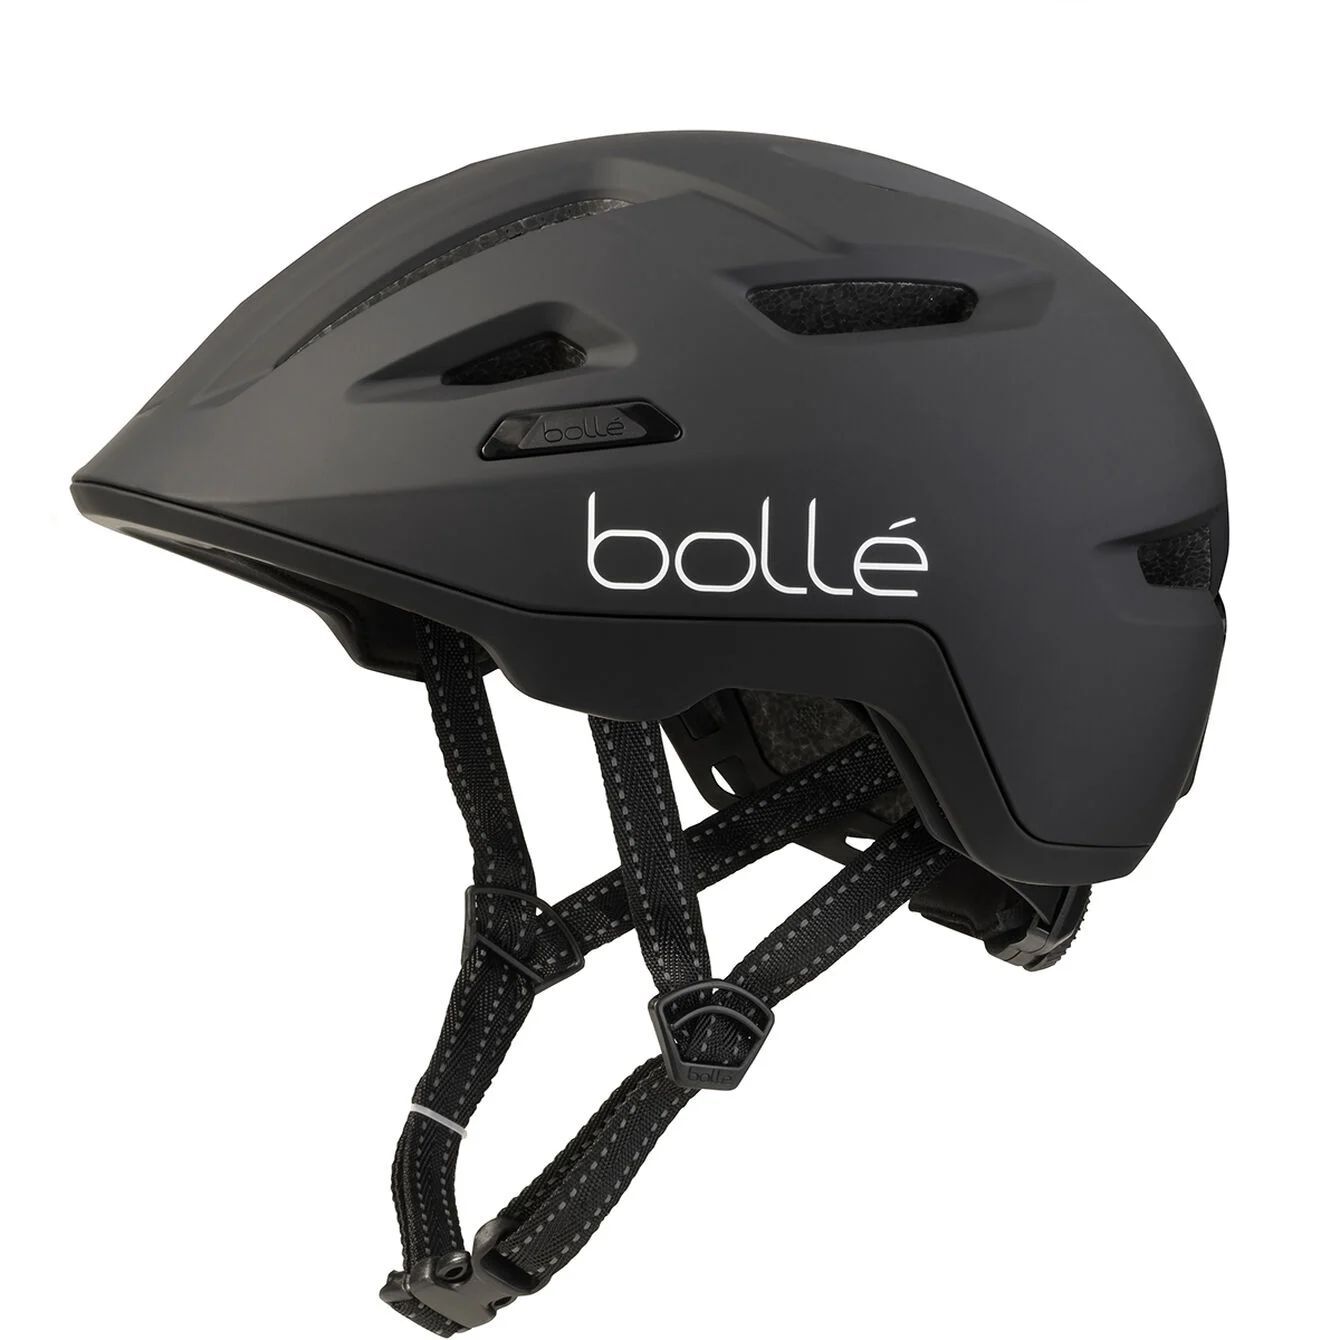 Bollé Stance - Cycling helmet